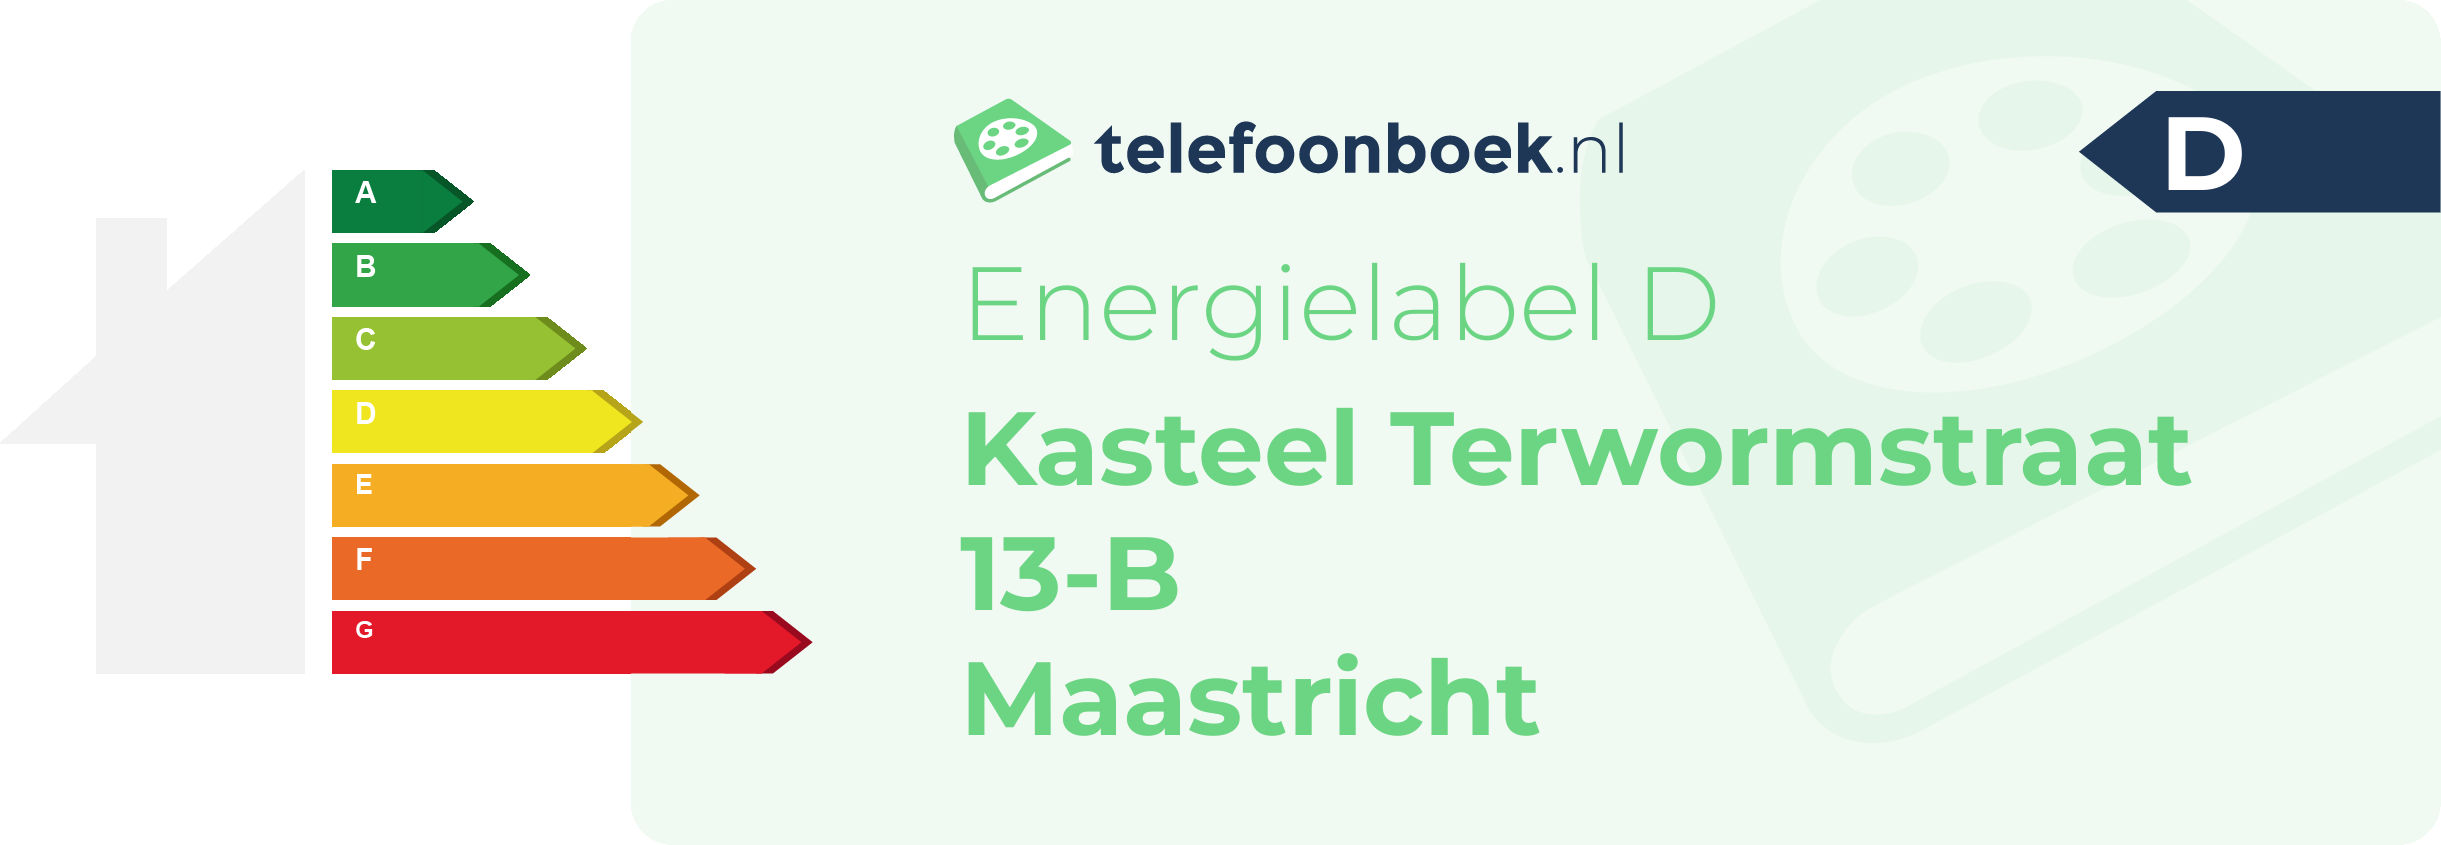 Energielabel Kasteel Terwormstraat 13-B Maastricht